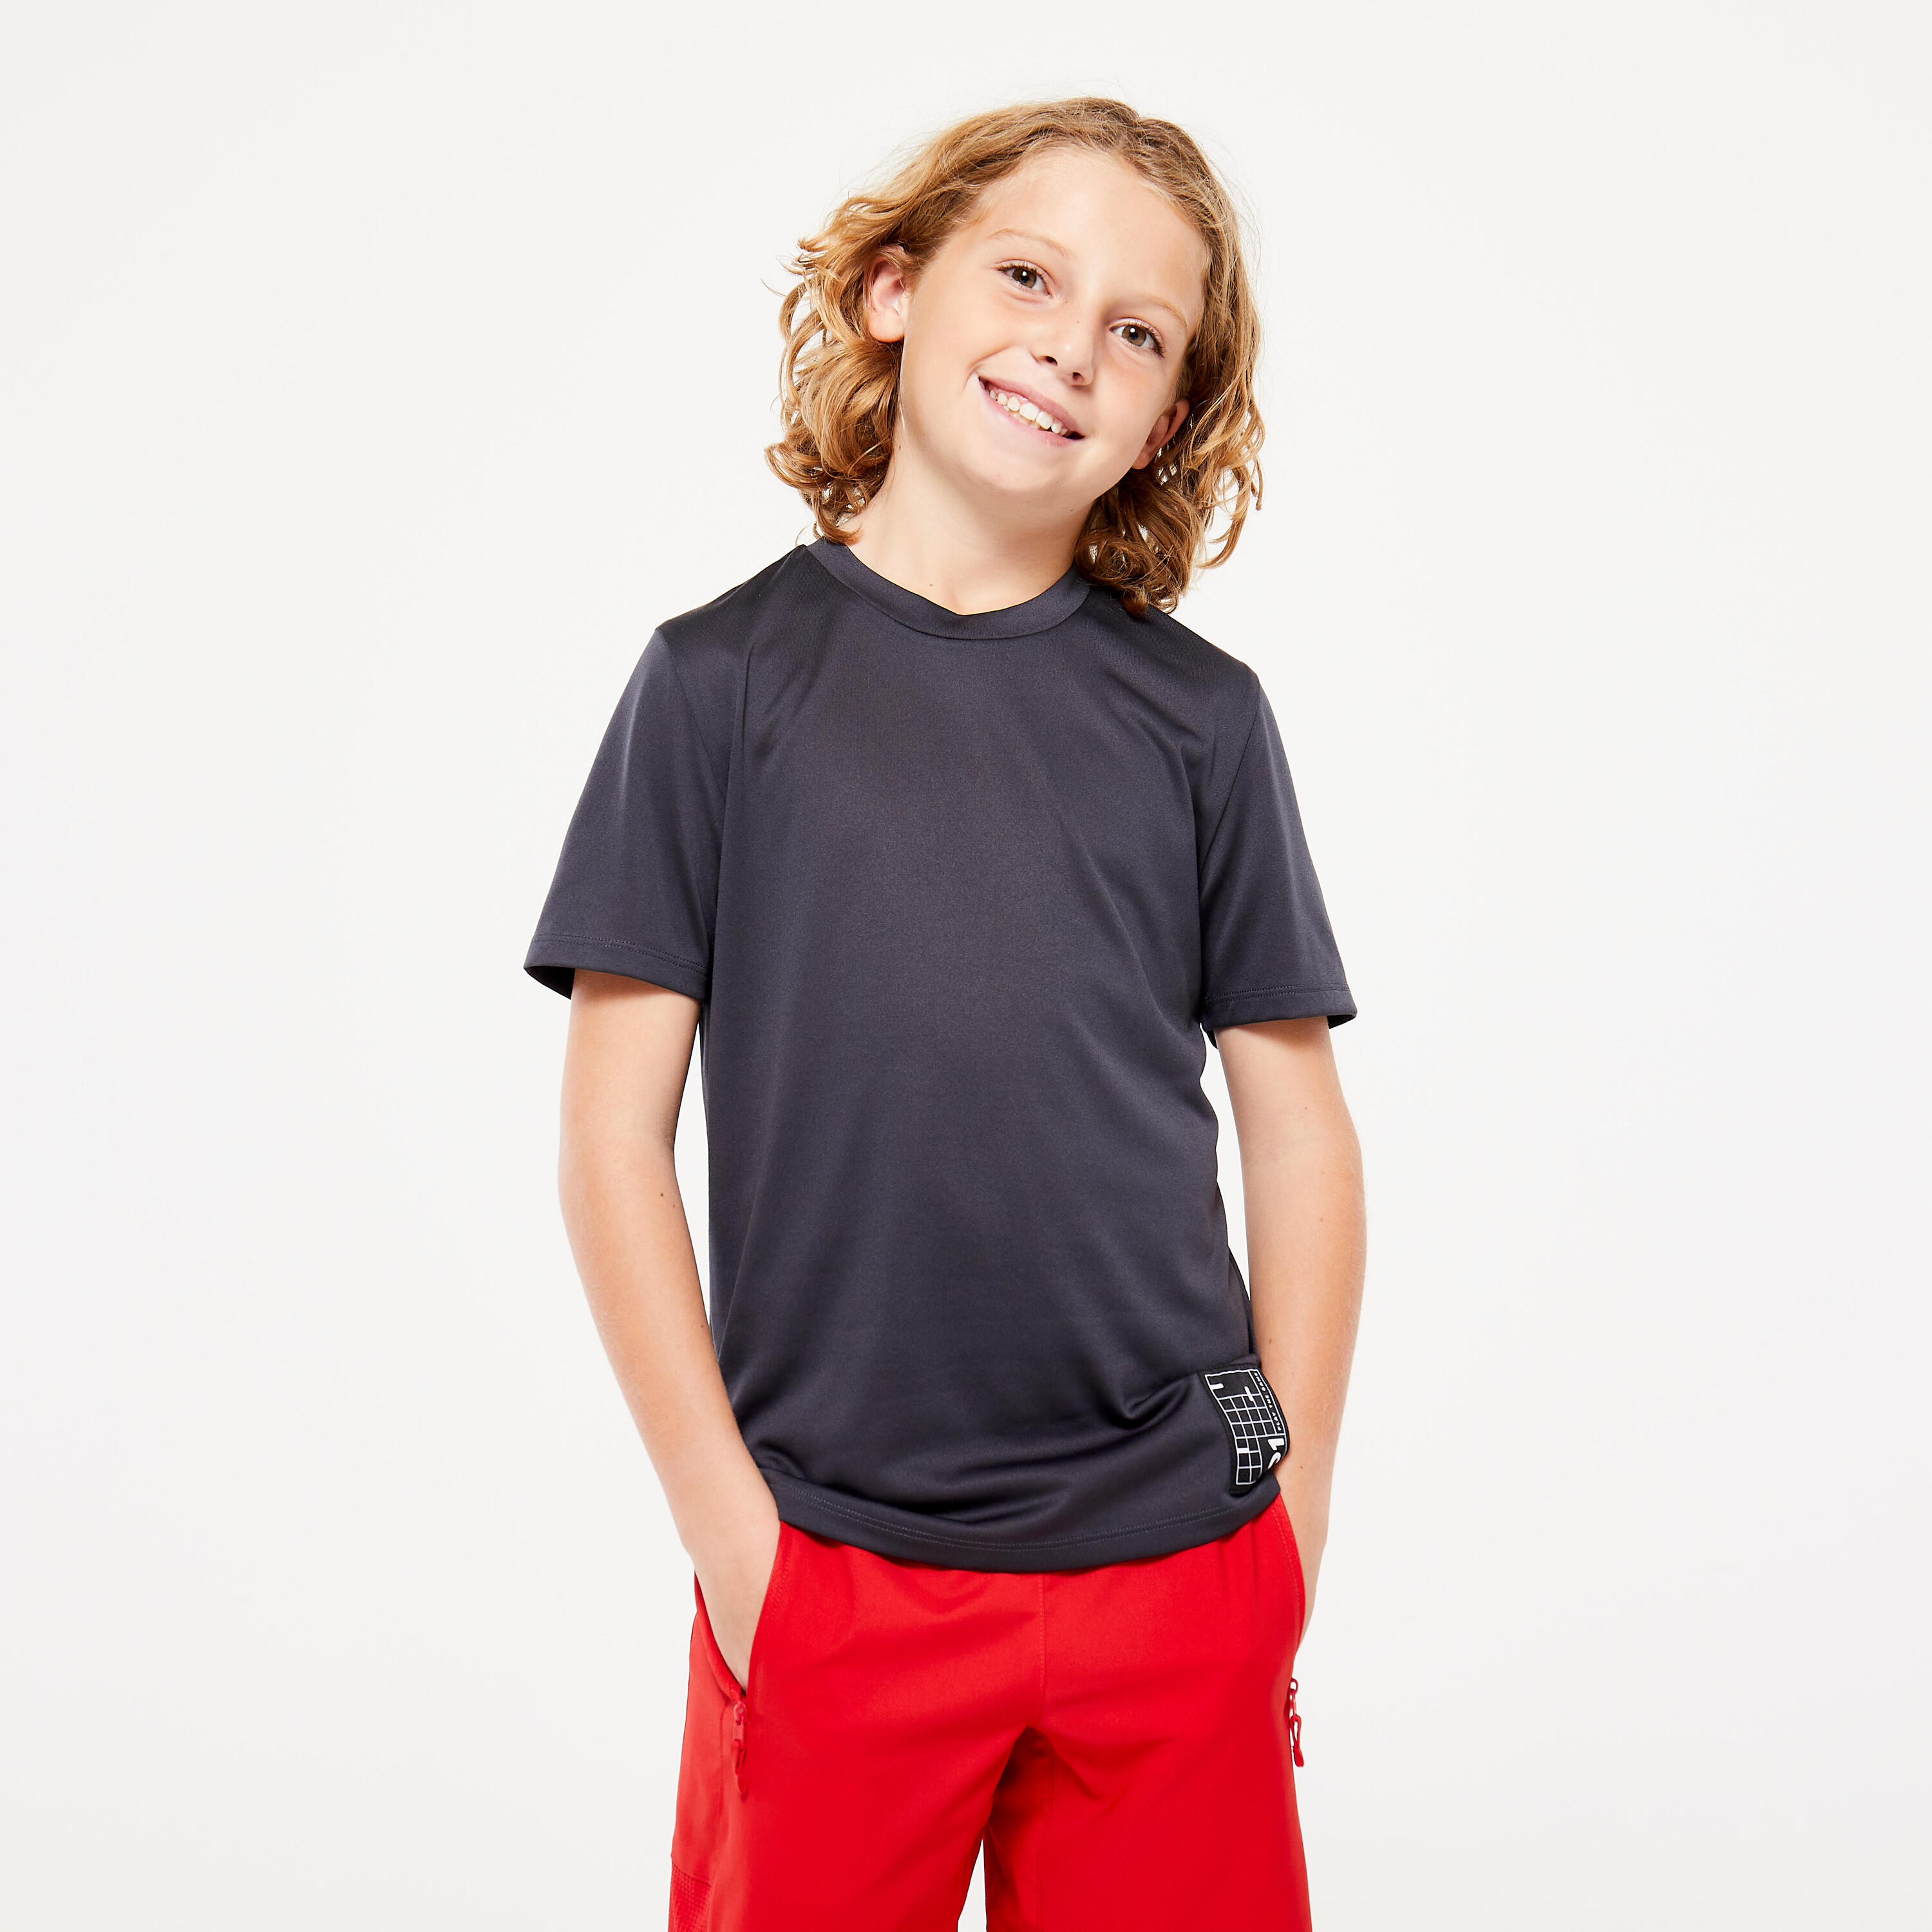 Kids' Breathable T-Shirt - Carbon Grey 1/4